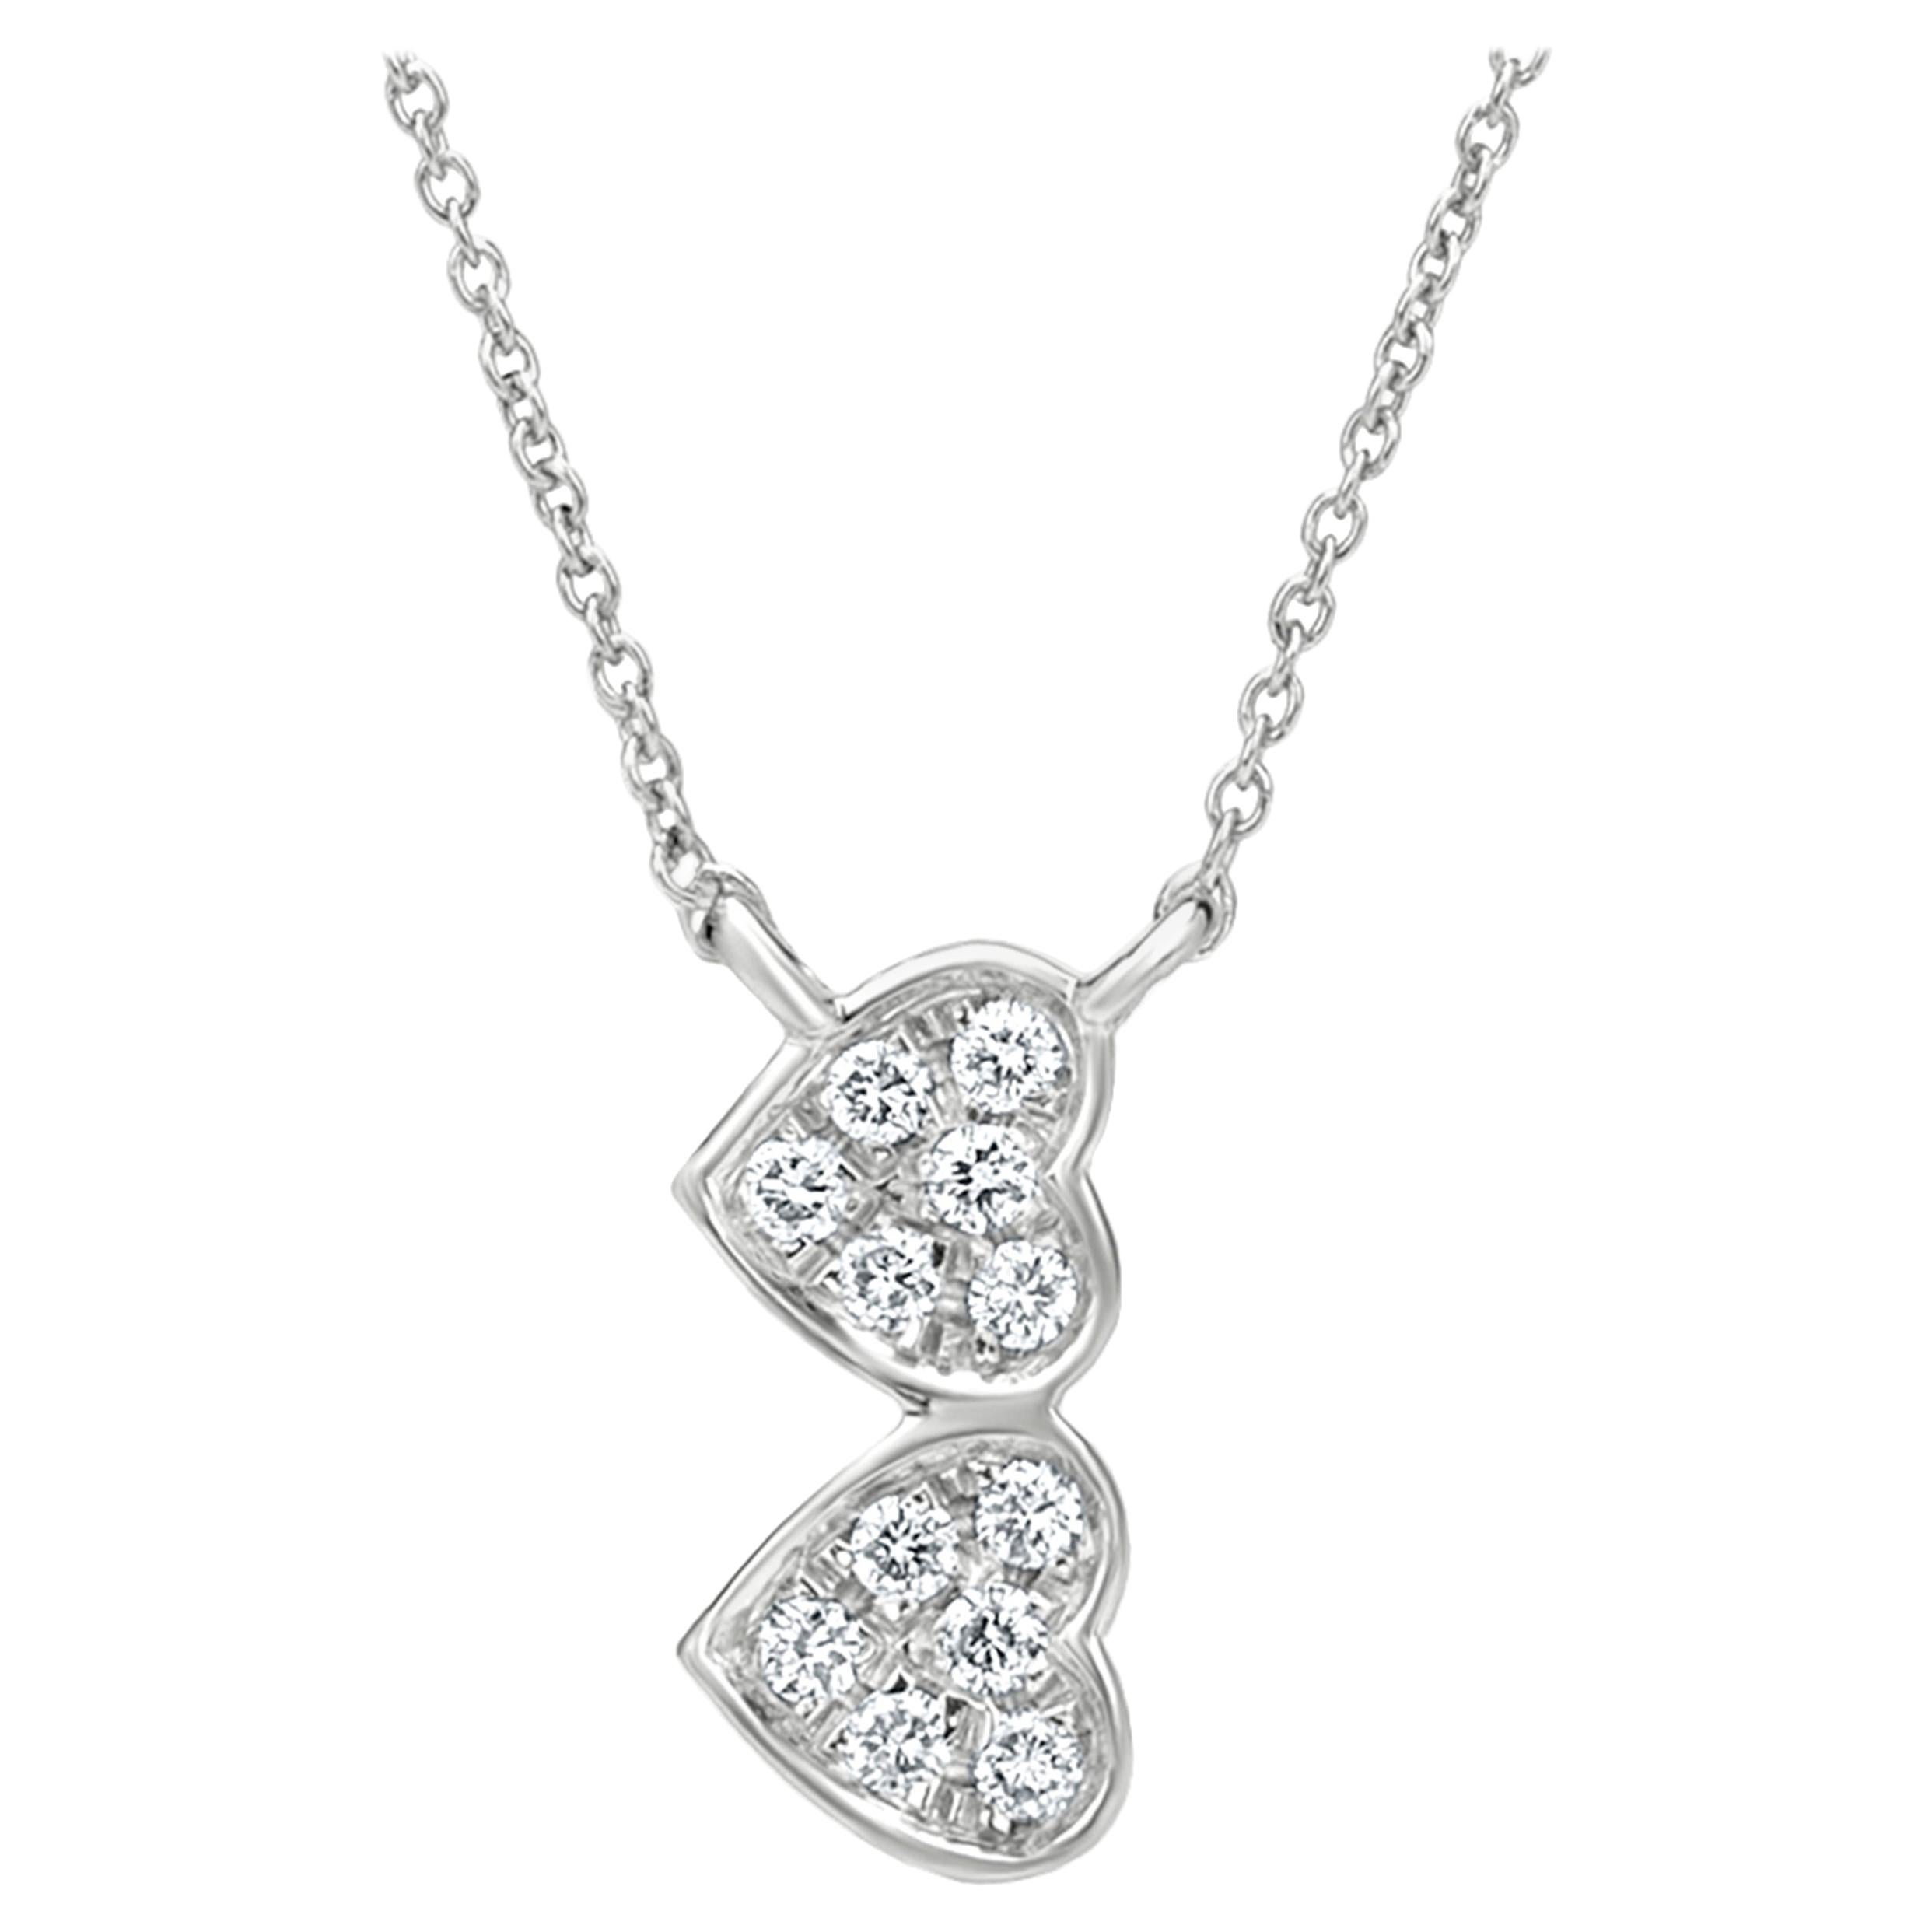 Luxle Double Heart Diamond Pendant Necklace in 18k White Gold